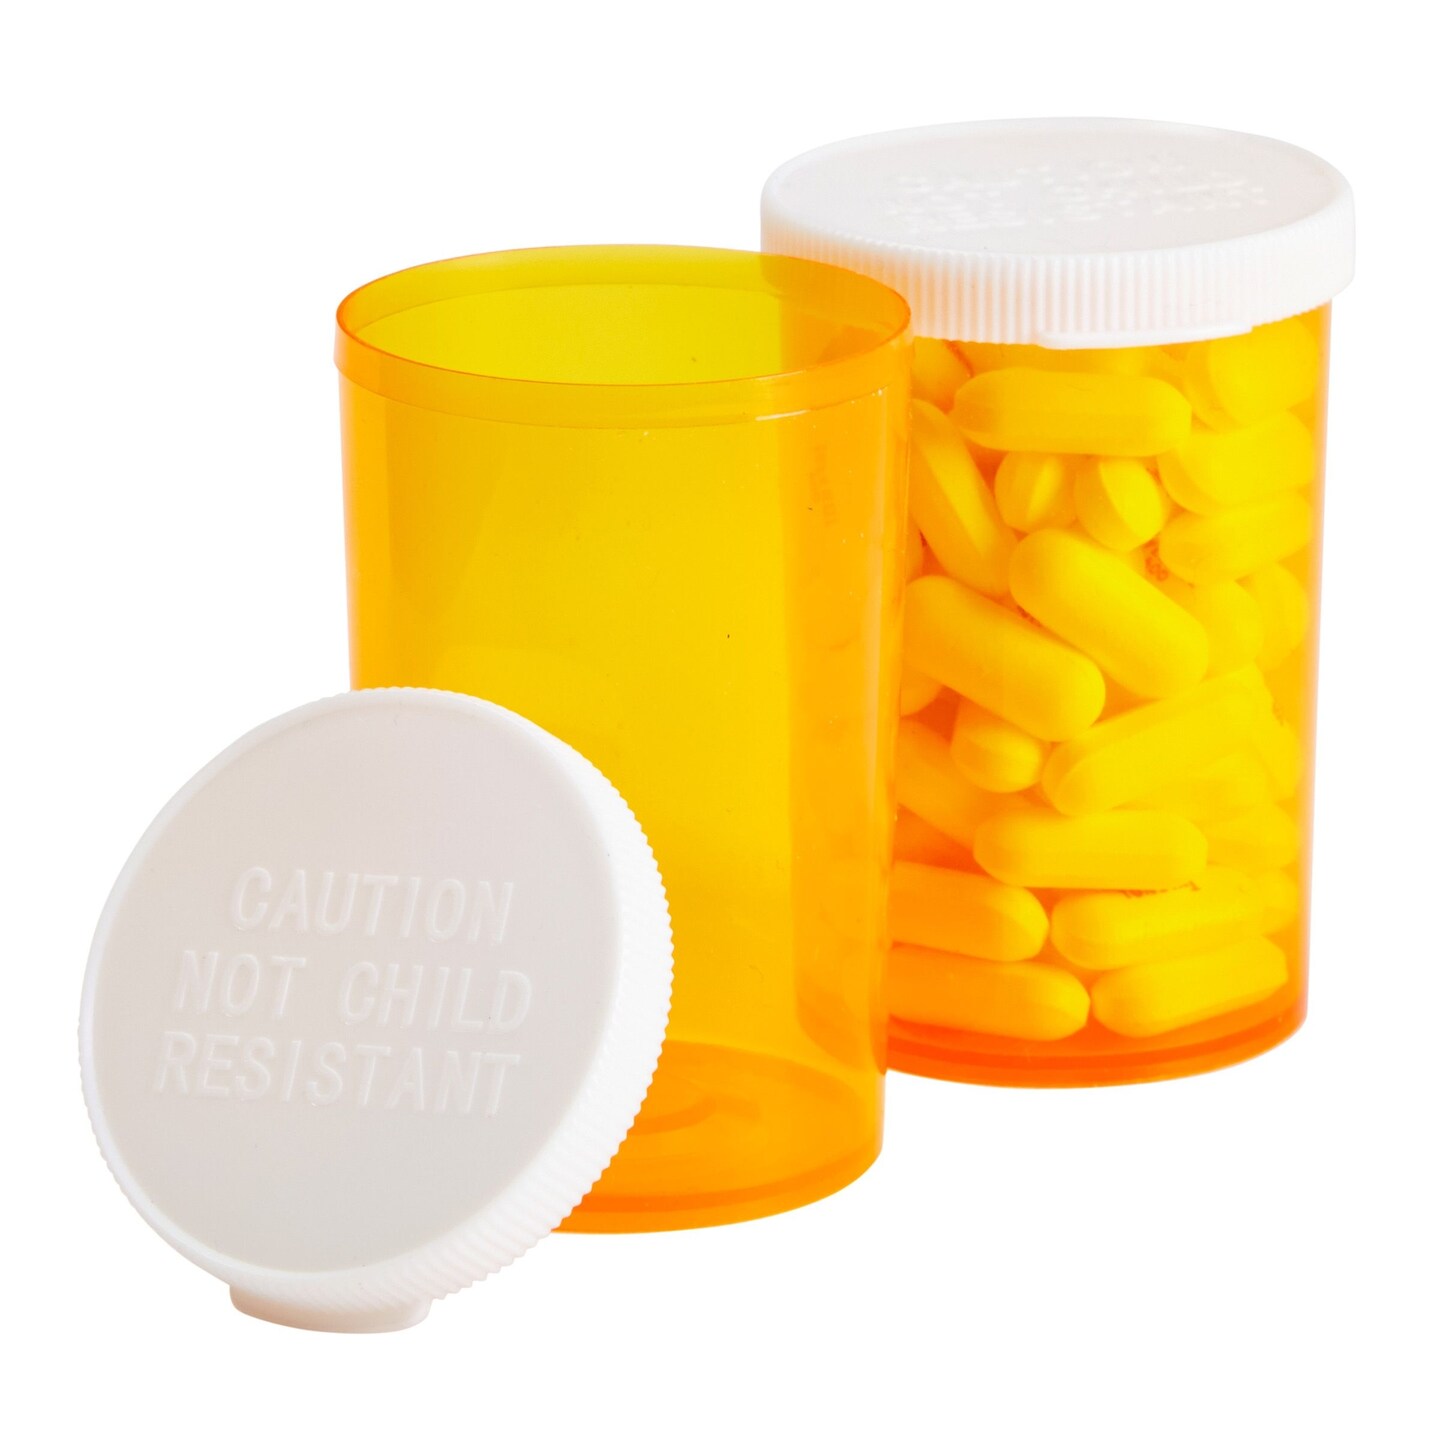 50 Pack Empty Pill Bottles with Caps for Prescription Medication, 20-Dram Plastic Medicine Container (Orange)